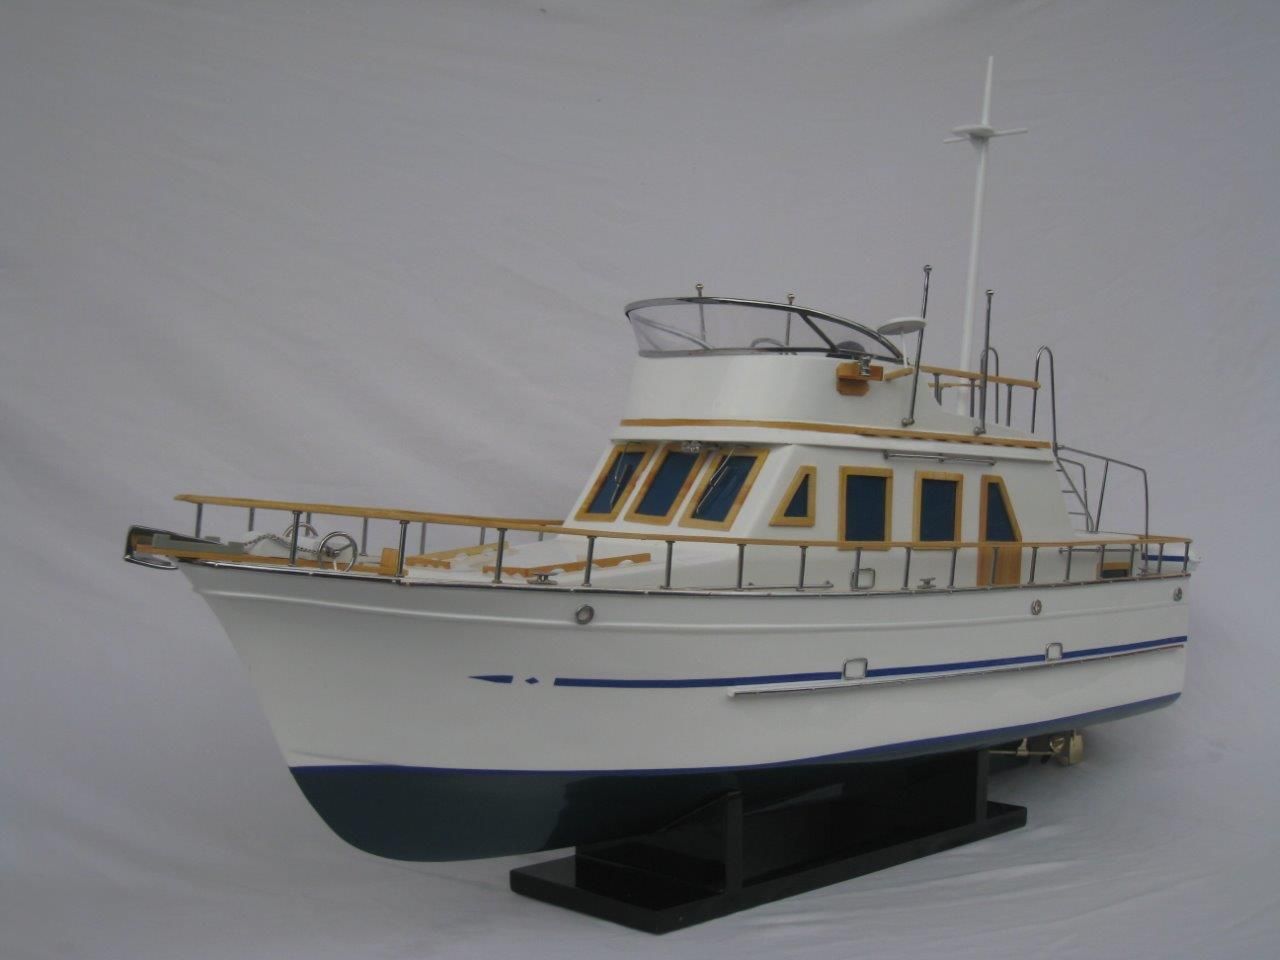 Reinee Roo Model Ship - GN